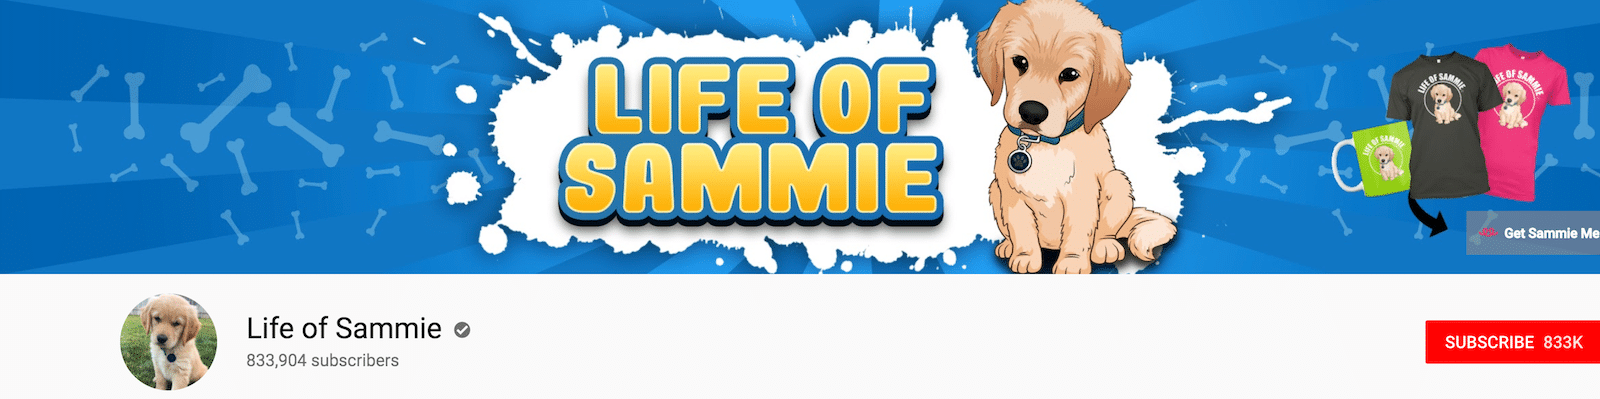 life of sammie1